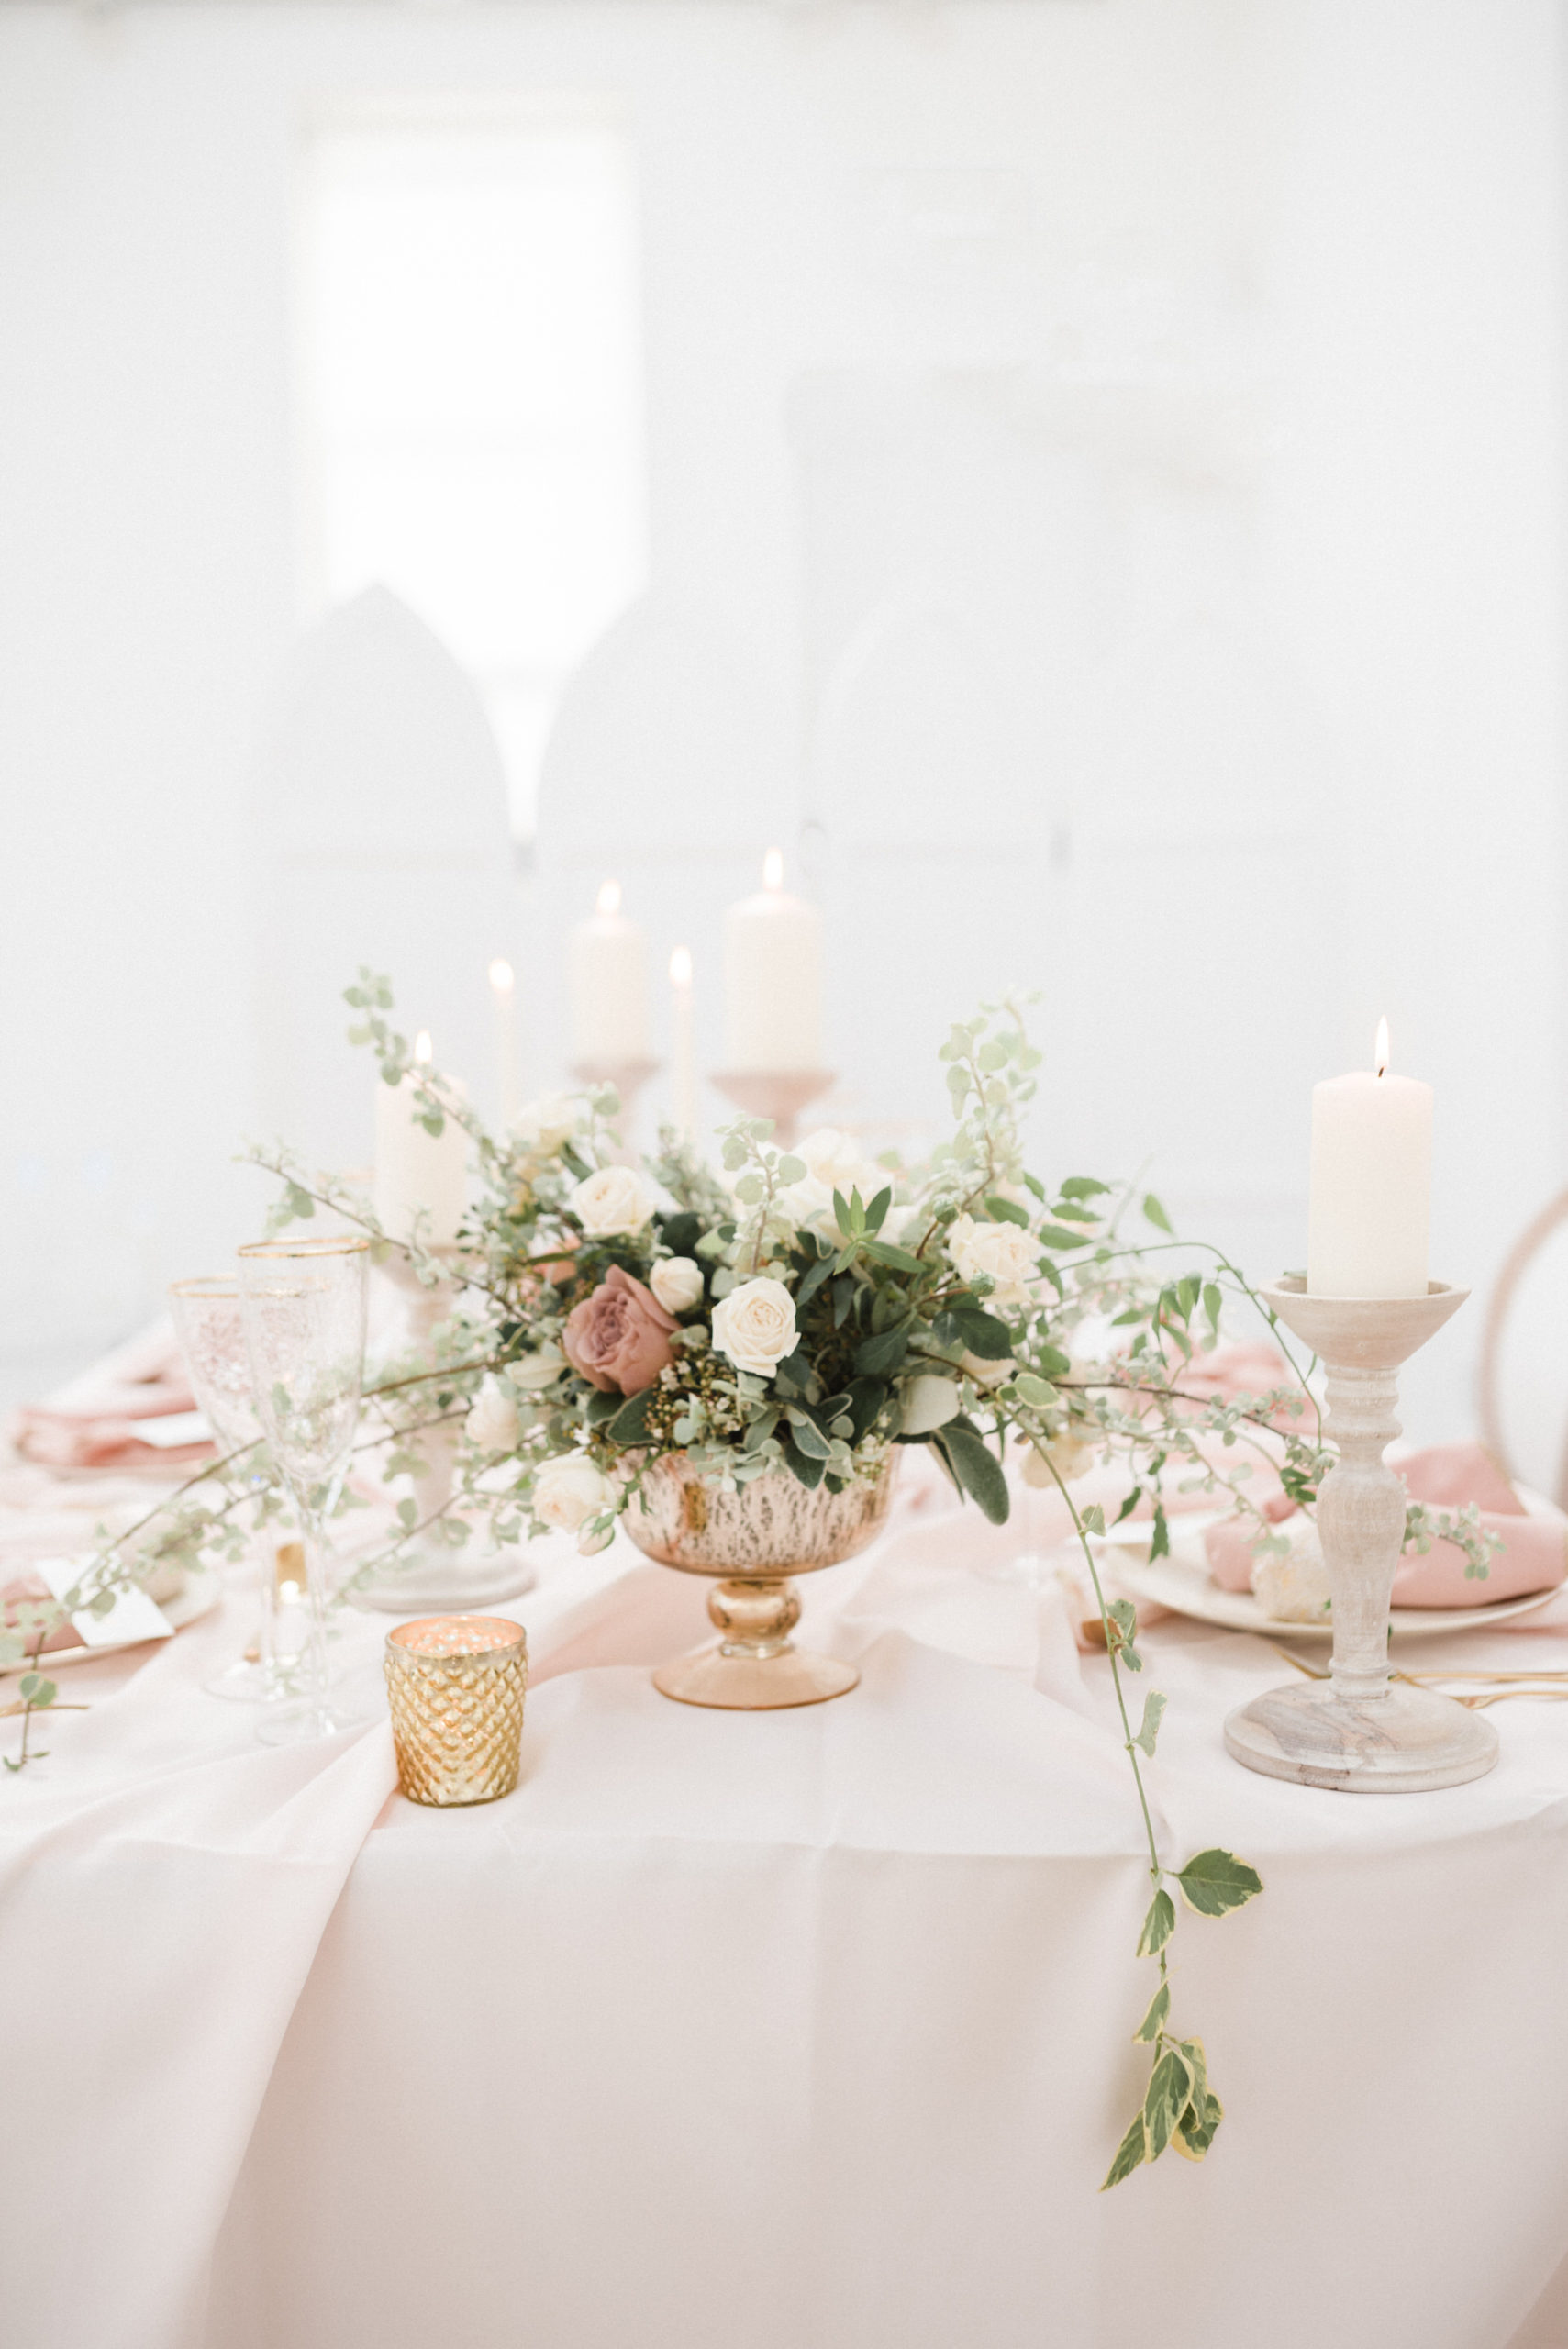 Blush and gold tablescape, fine art wedding table, blush wedding tablescape, elegant wedding table decor, luxury wedding decor, bridal shoot, gold place settings